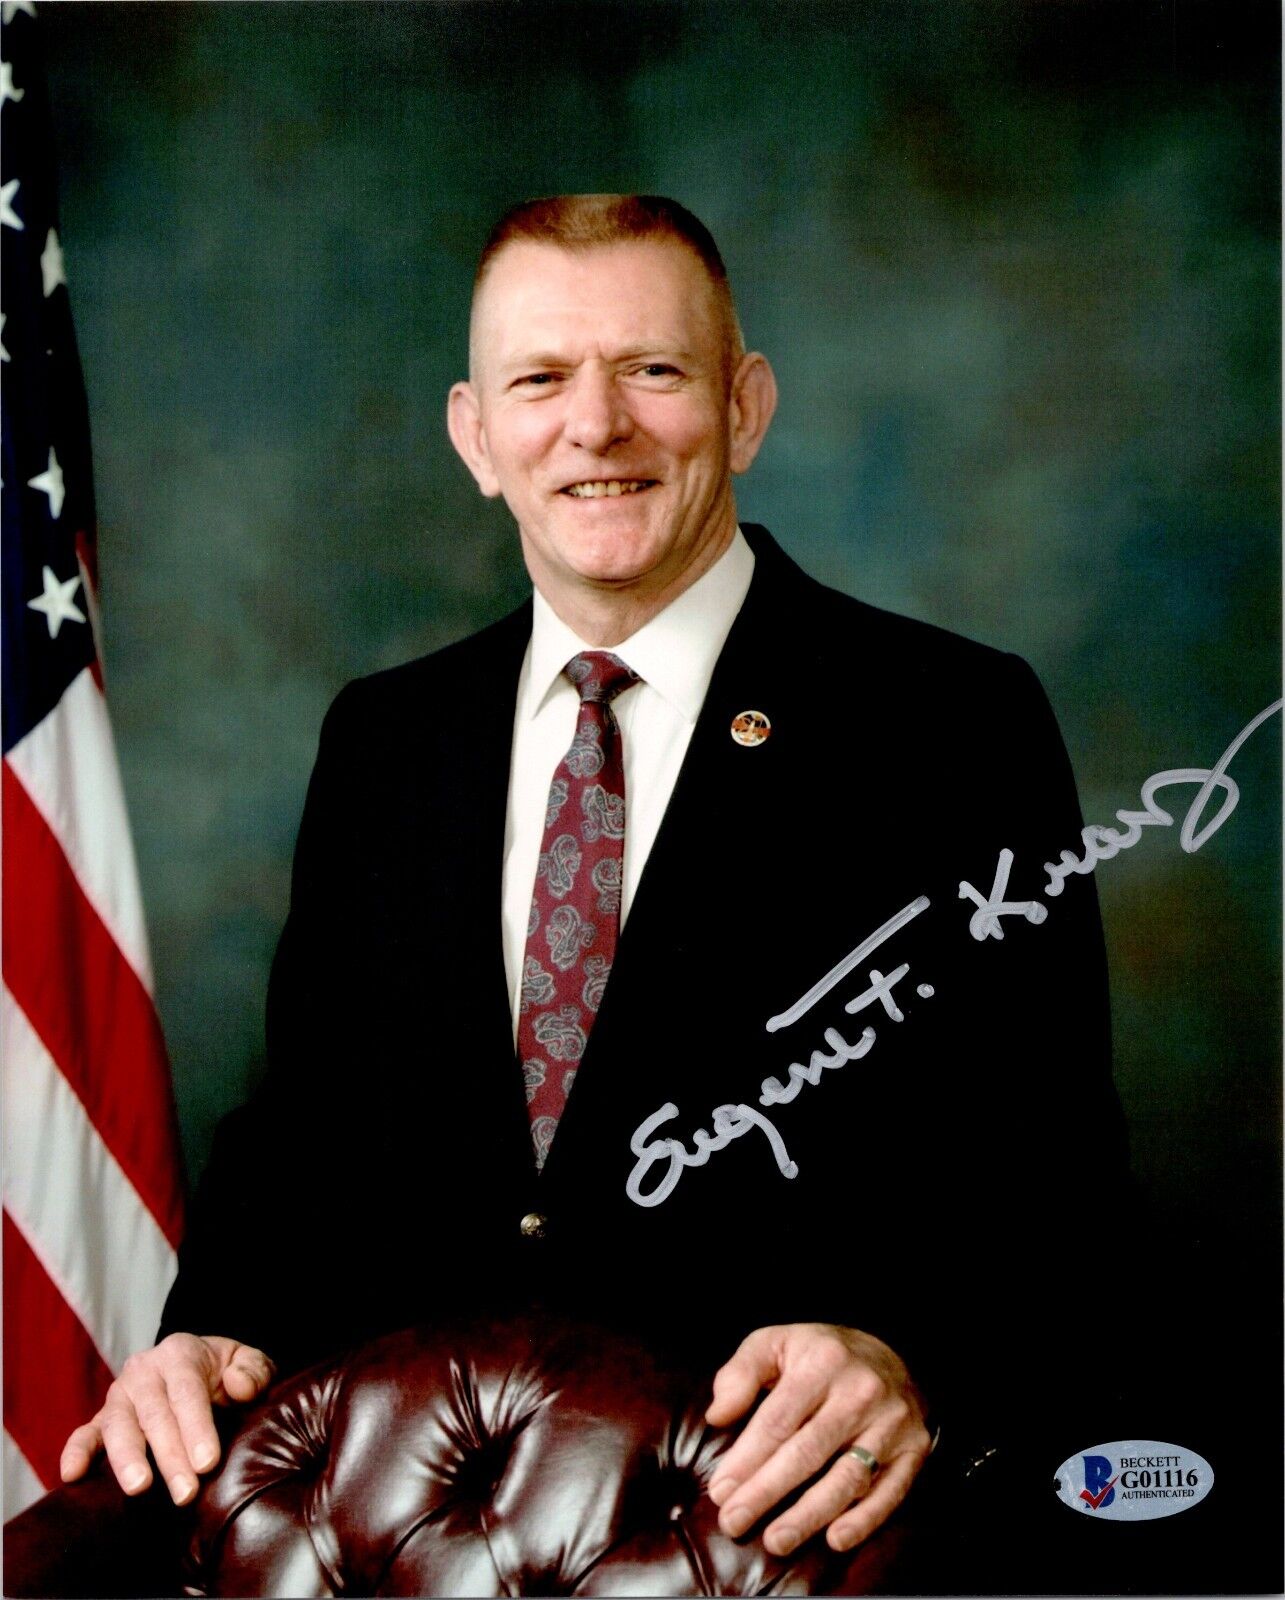 Eugene F. Kranz 'Apollo 13' Autographed 8x10 Photo Beckett Authentication